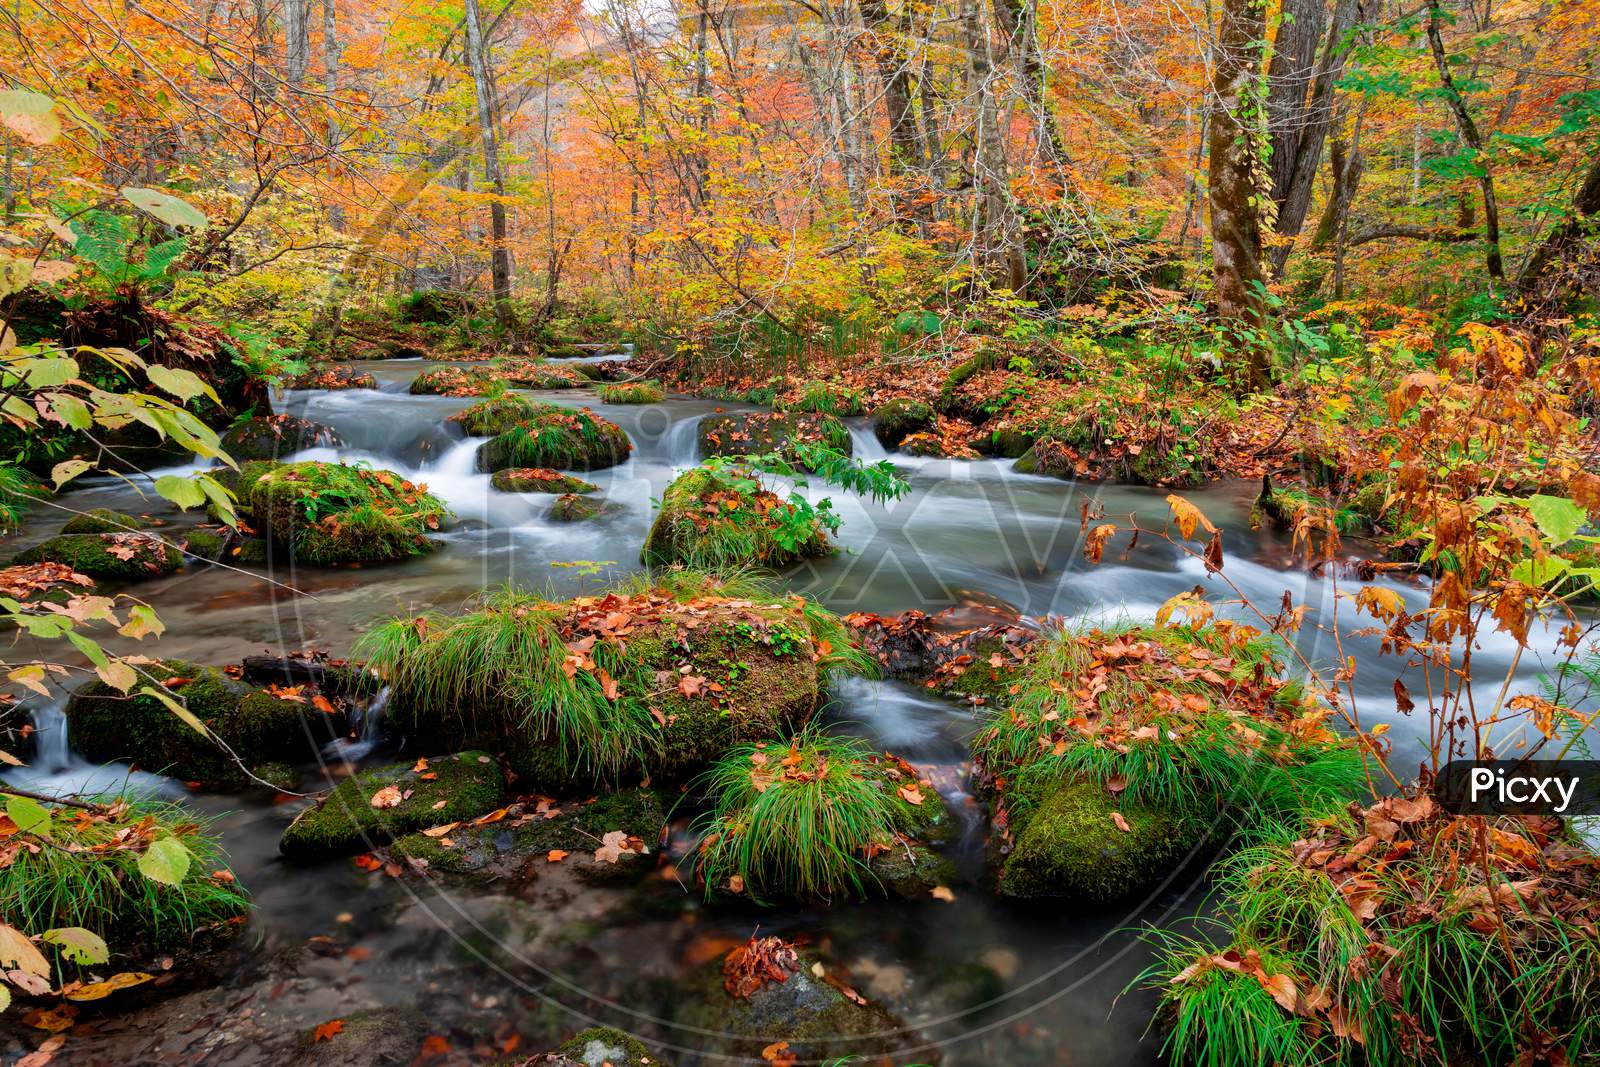 Oirase stream during autumn.